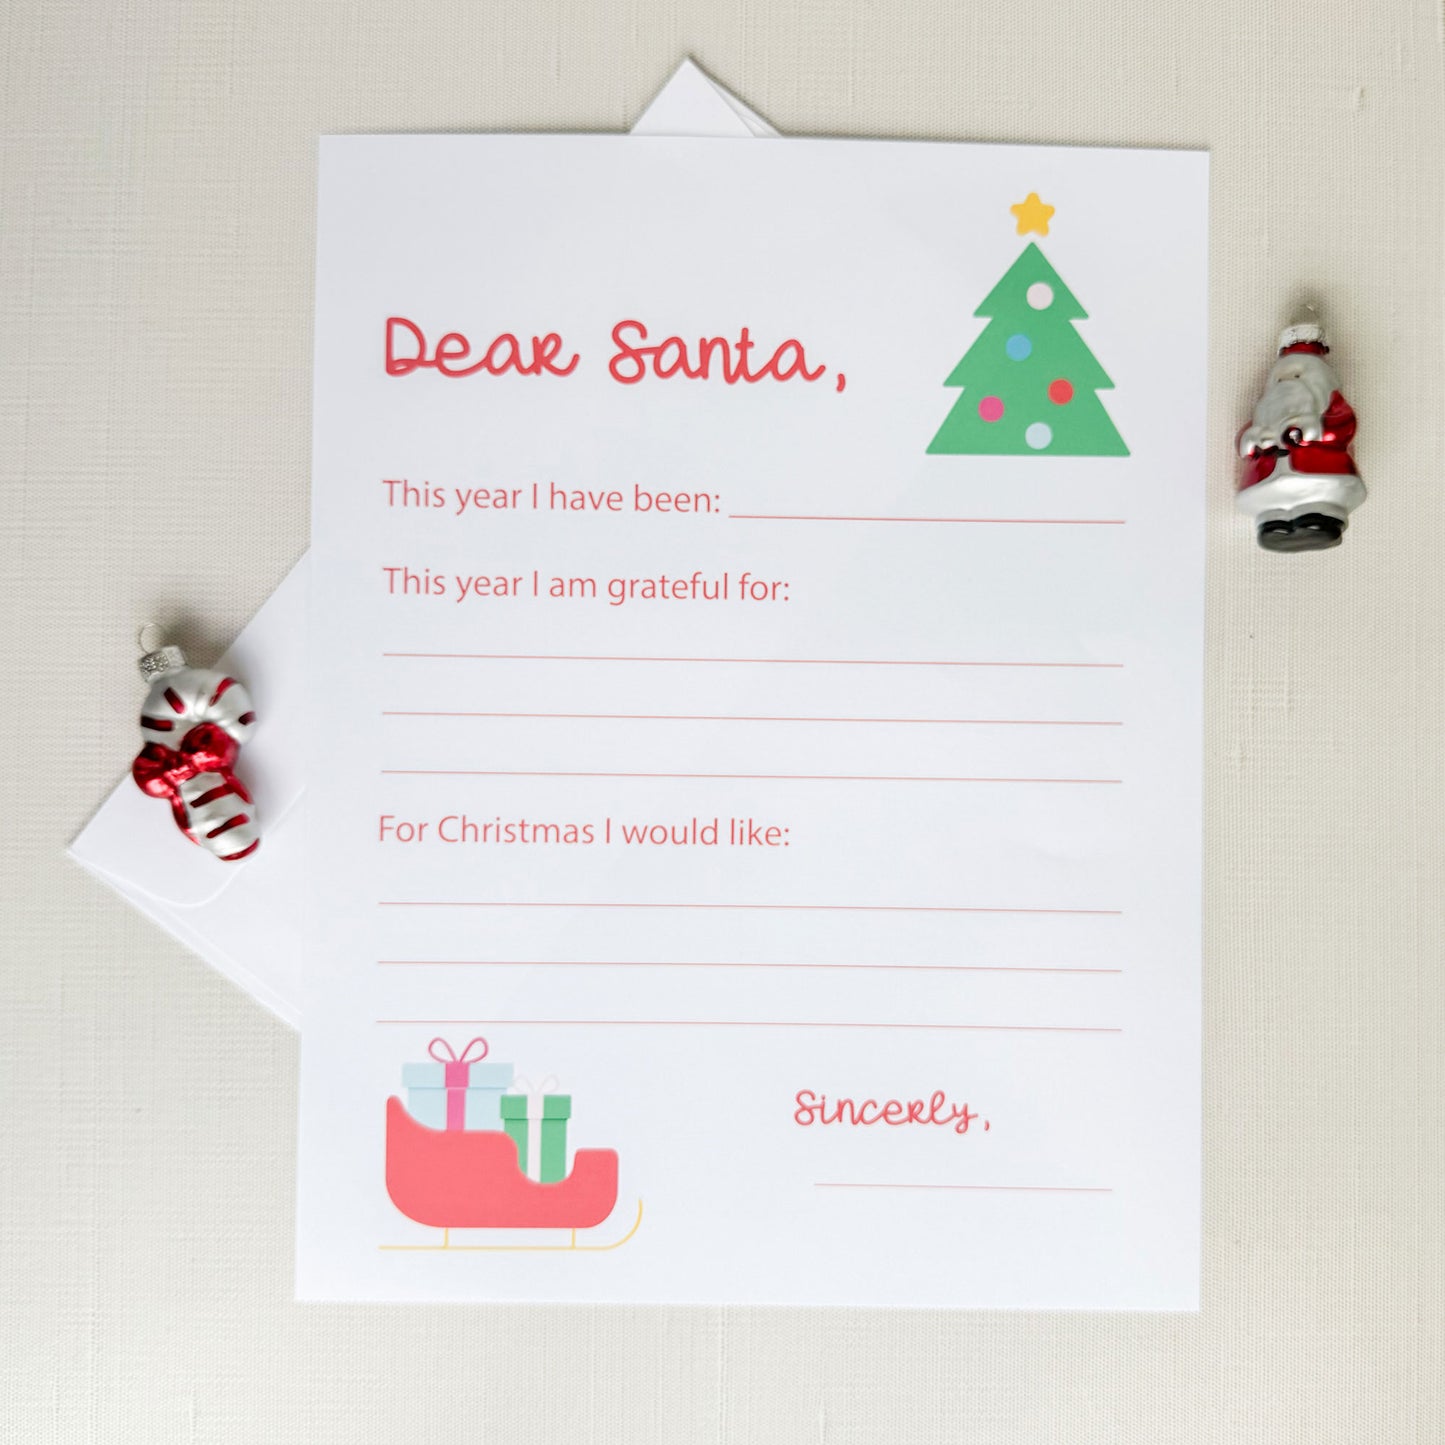 preppy letter to santa, fill in worksheet for kids